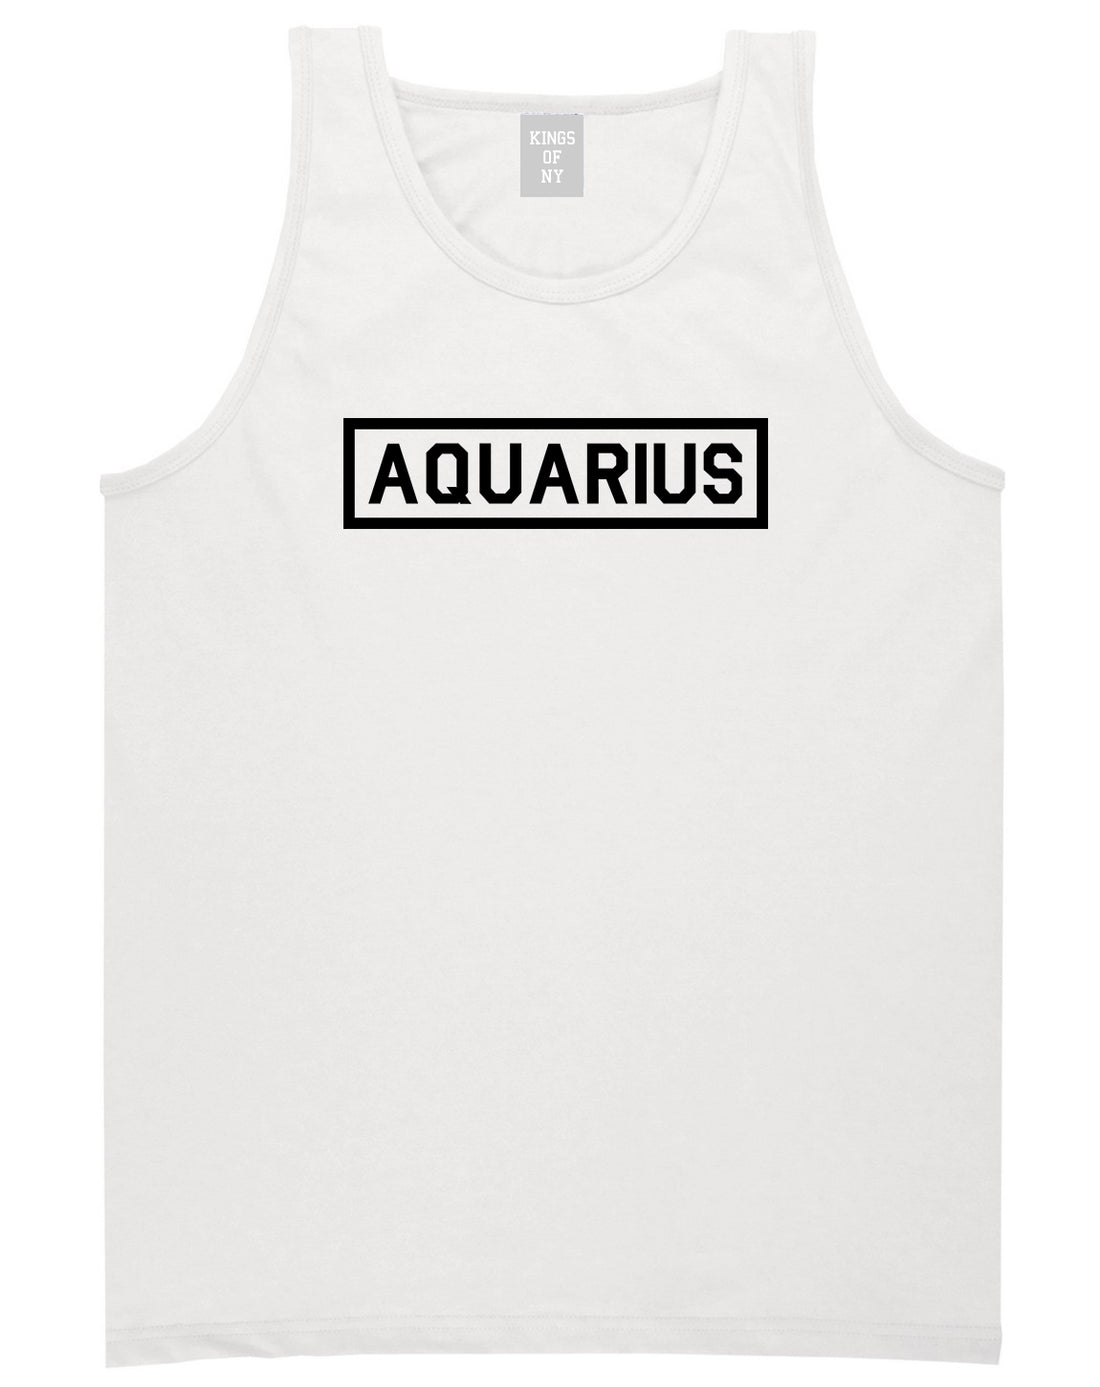 Aquarius Horoscope Sign Mens White Tank Top Shirt by KINGS OF NY